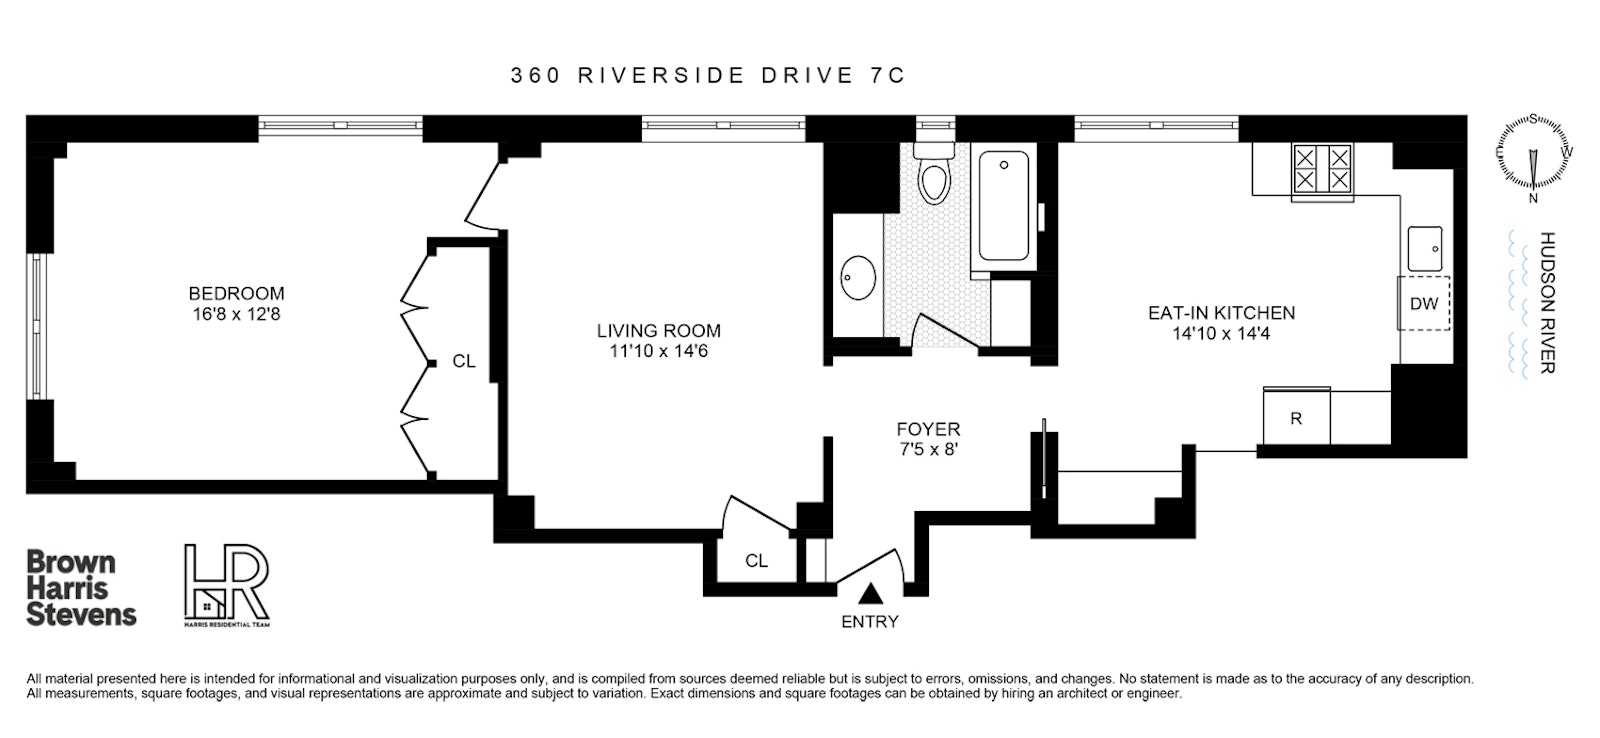 Floorplan for 360 Riverside Dr, 7C